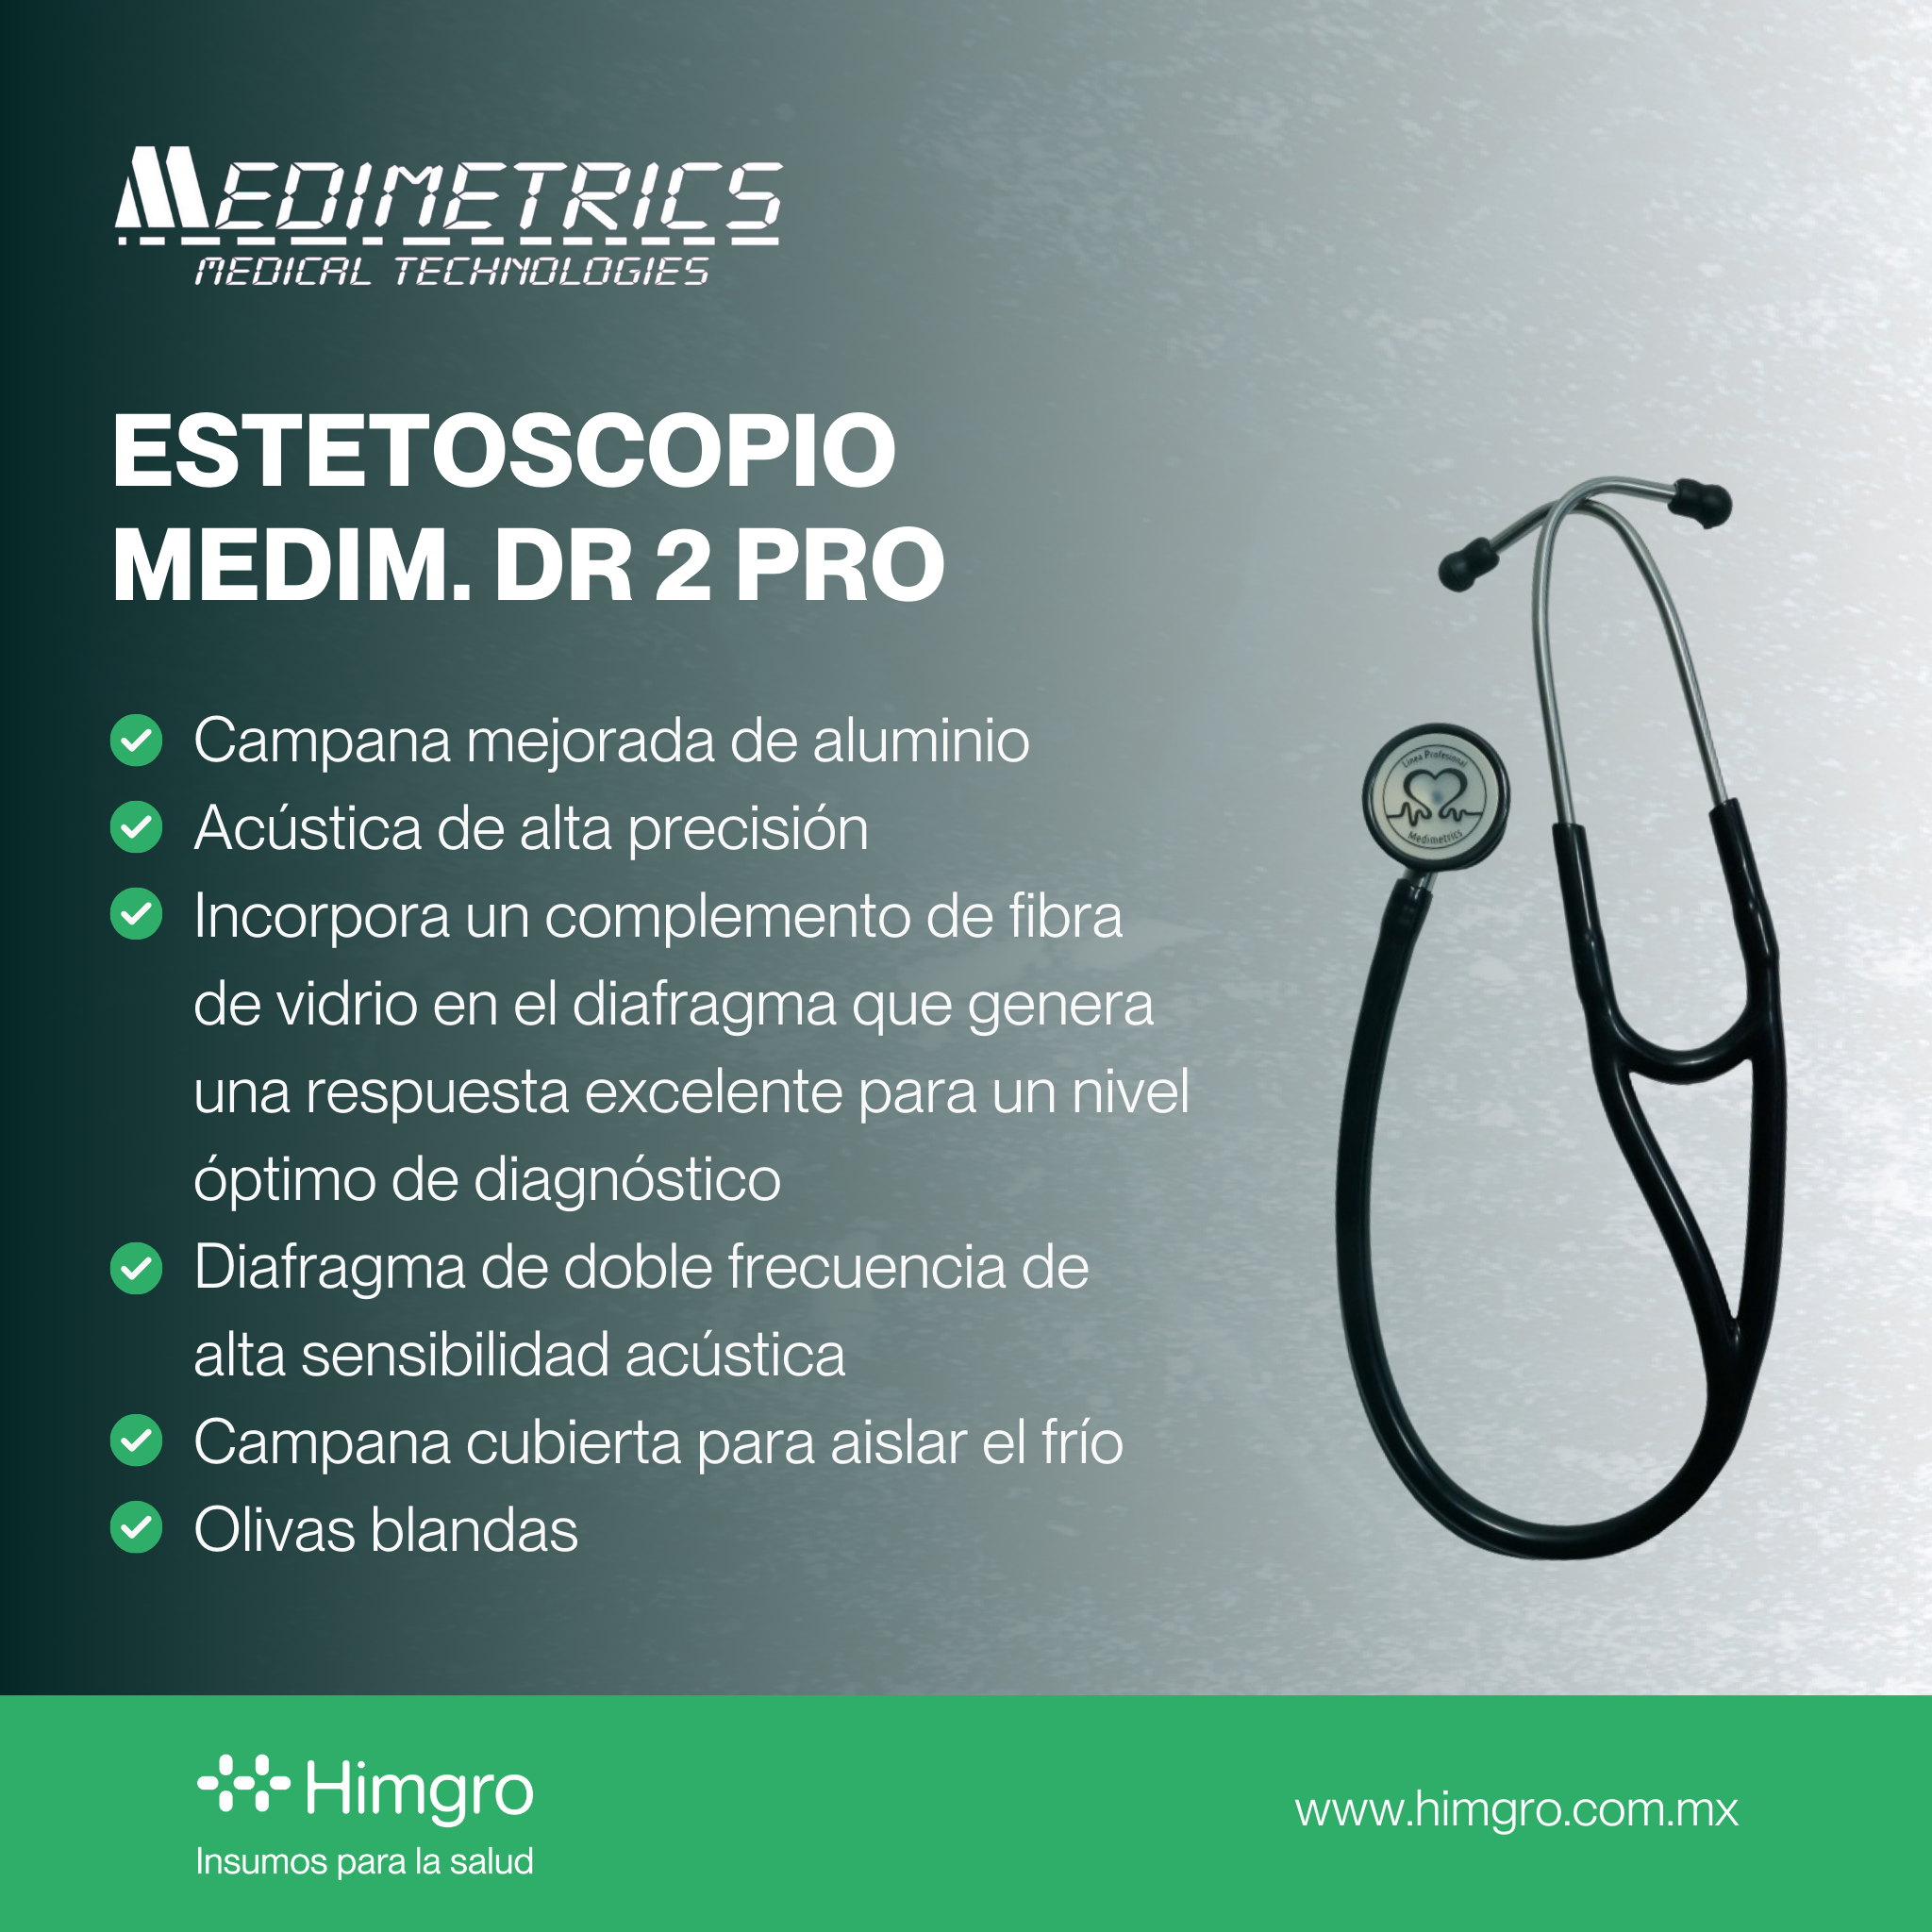 Estetoscopio medim. dr. 2 pro